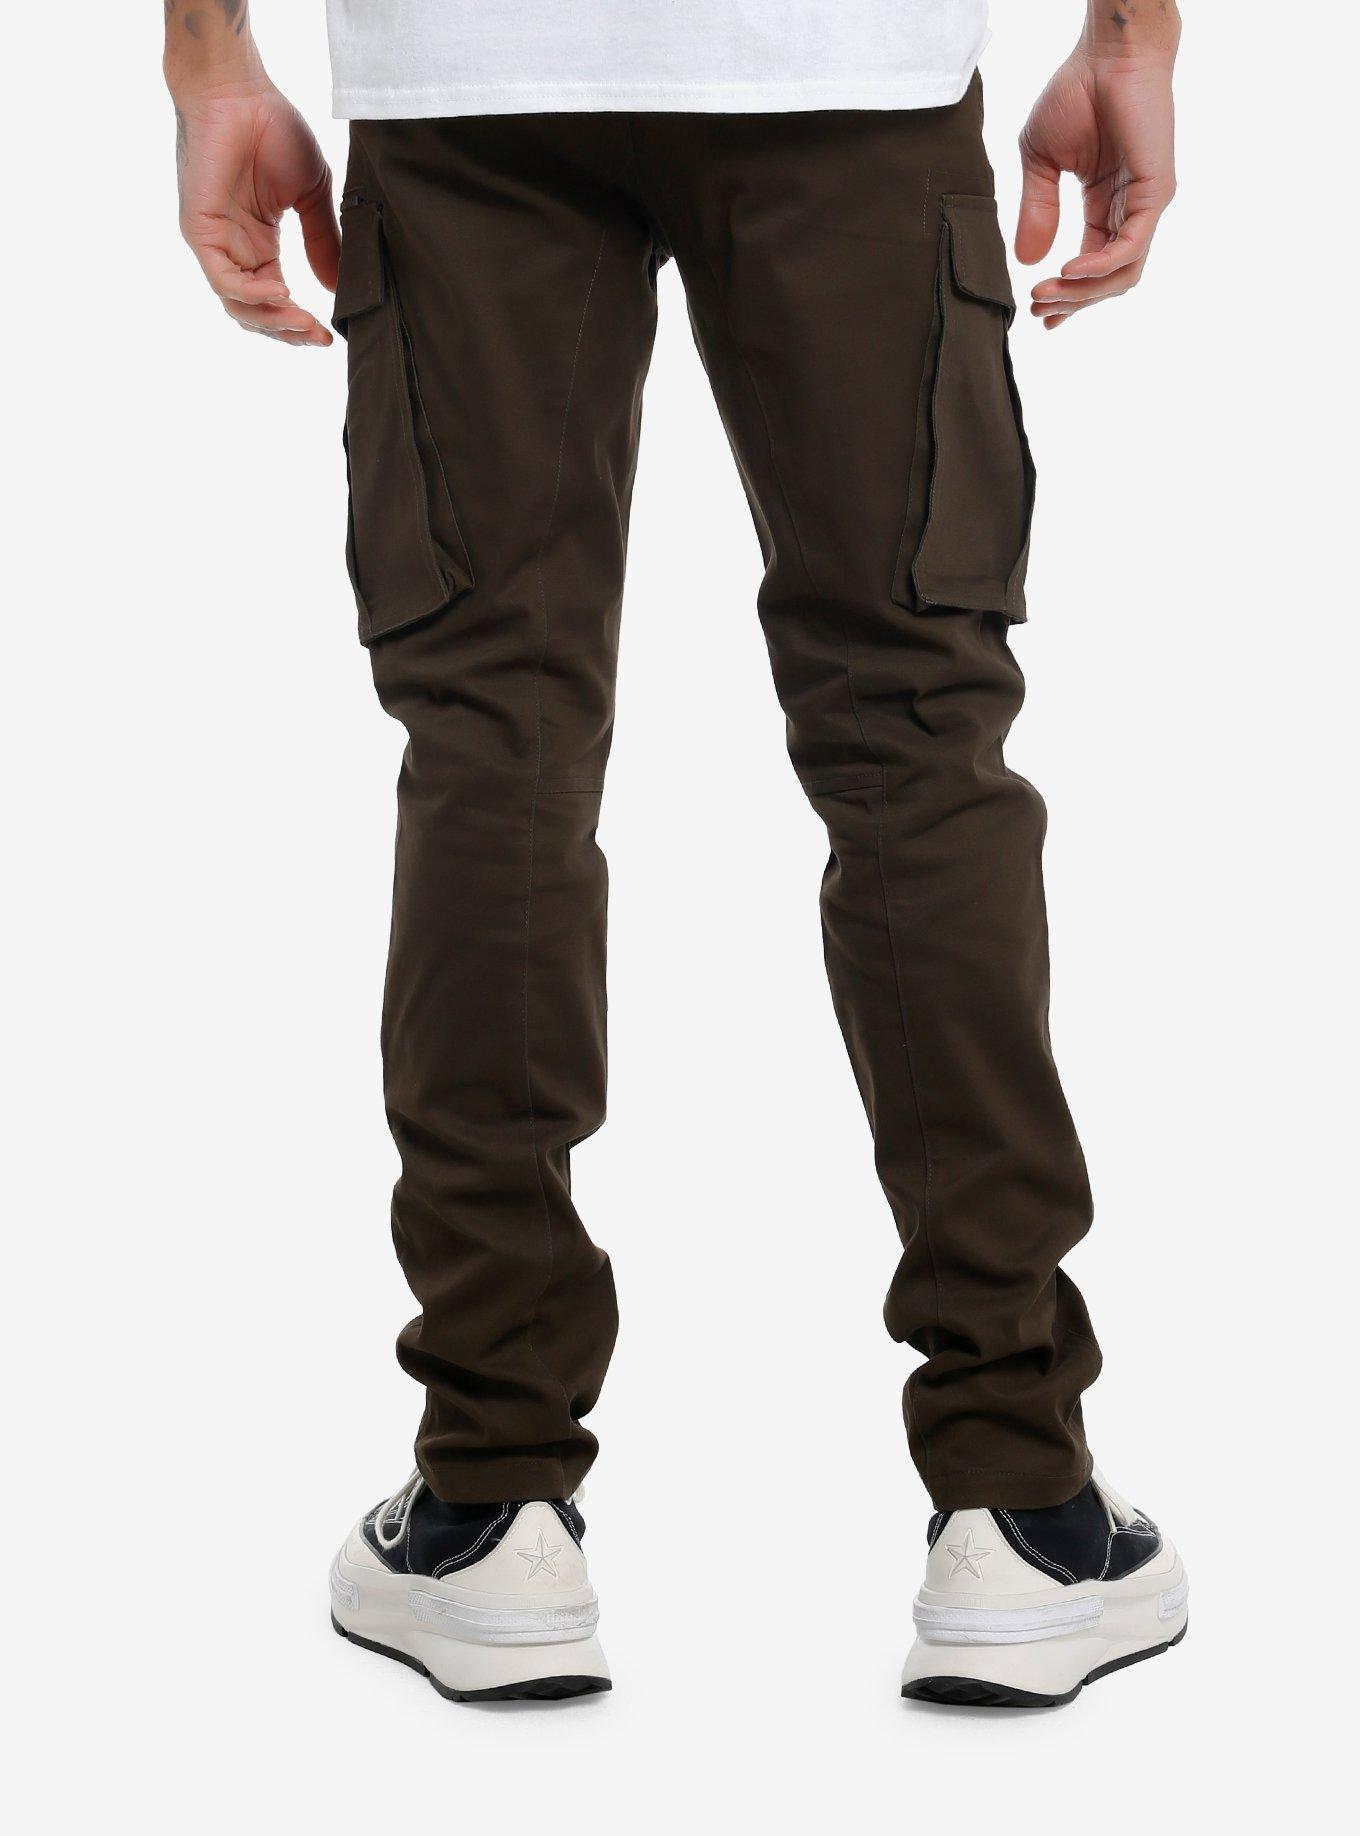 Olive Zipper Cargo Pants, OLIVE, alternate